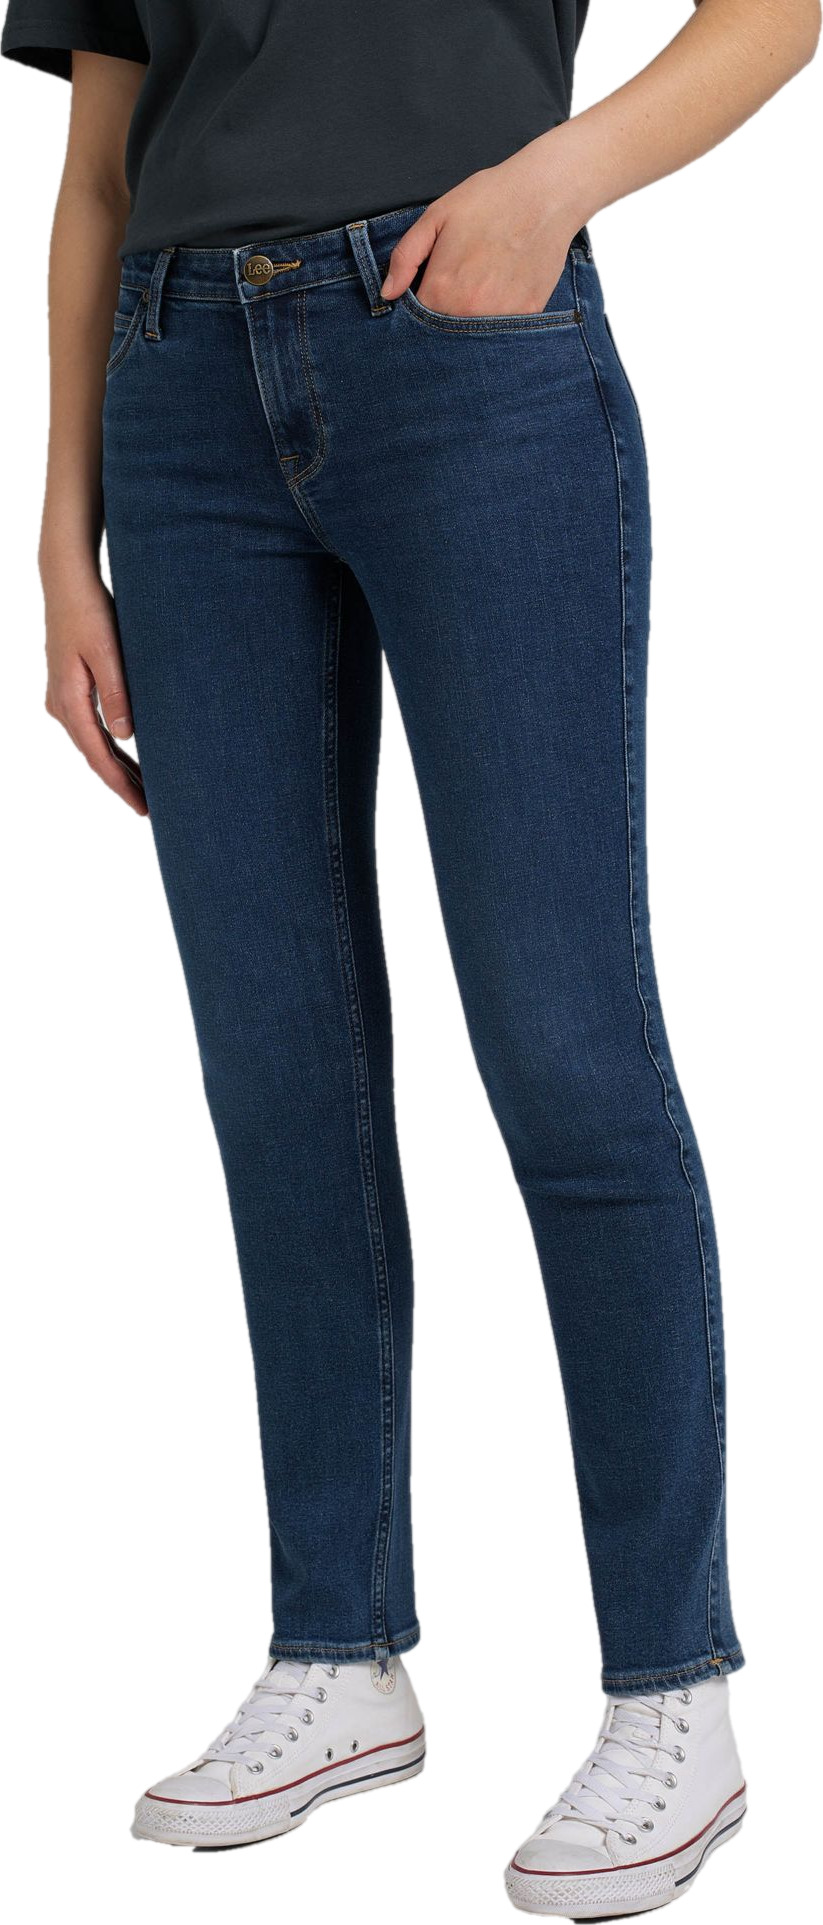 Джинсы Lee Women Elly Jeans (L305QDKF) купить за 6374 руб. винтернет-магазине JNS